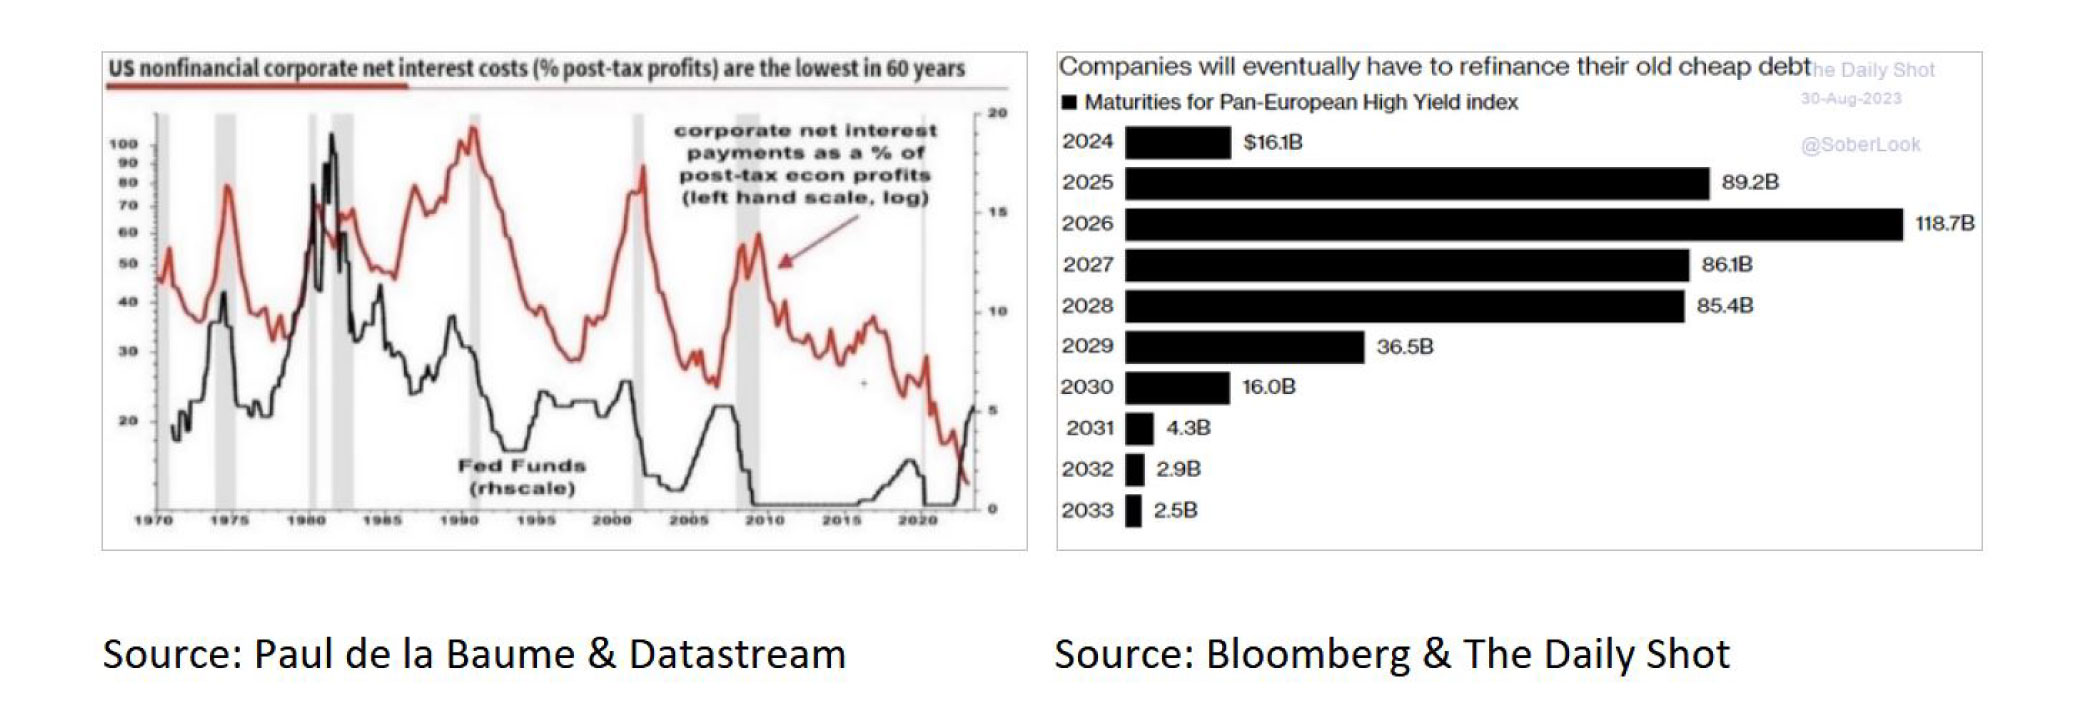 US nonfinancial corporate net interest costs